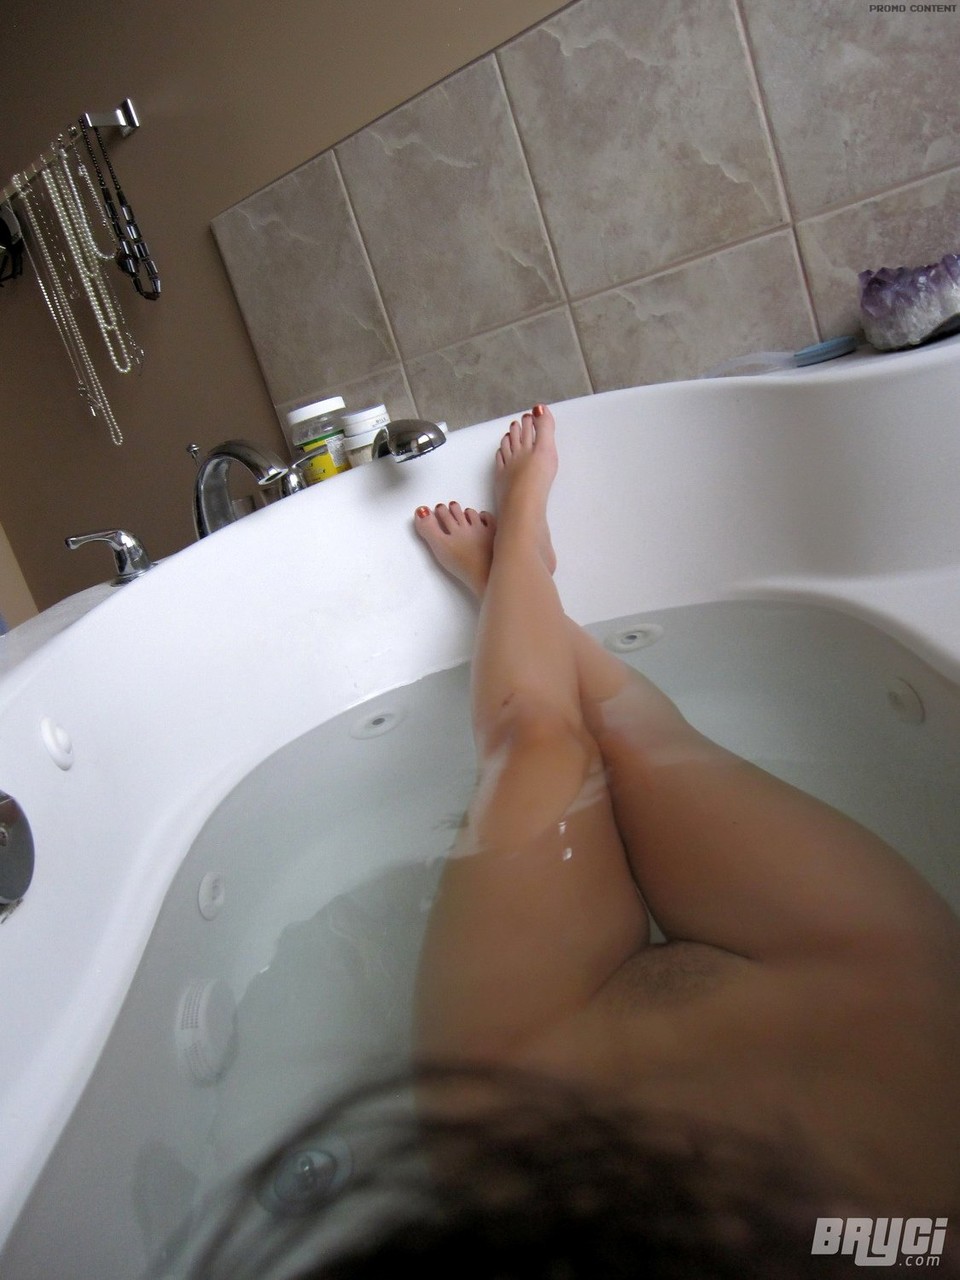 Stunning model Bryci in the tub showing off her big tits and perfect nipples foto porno #422527703 | Bryci Pics, Bryci, Selfie, porno mobile